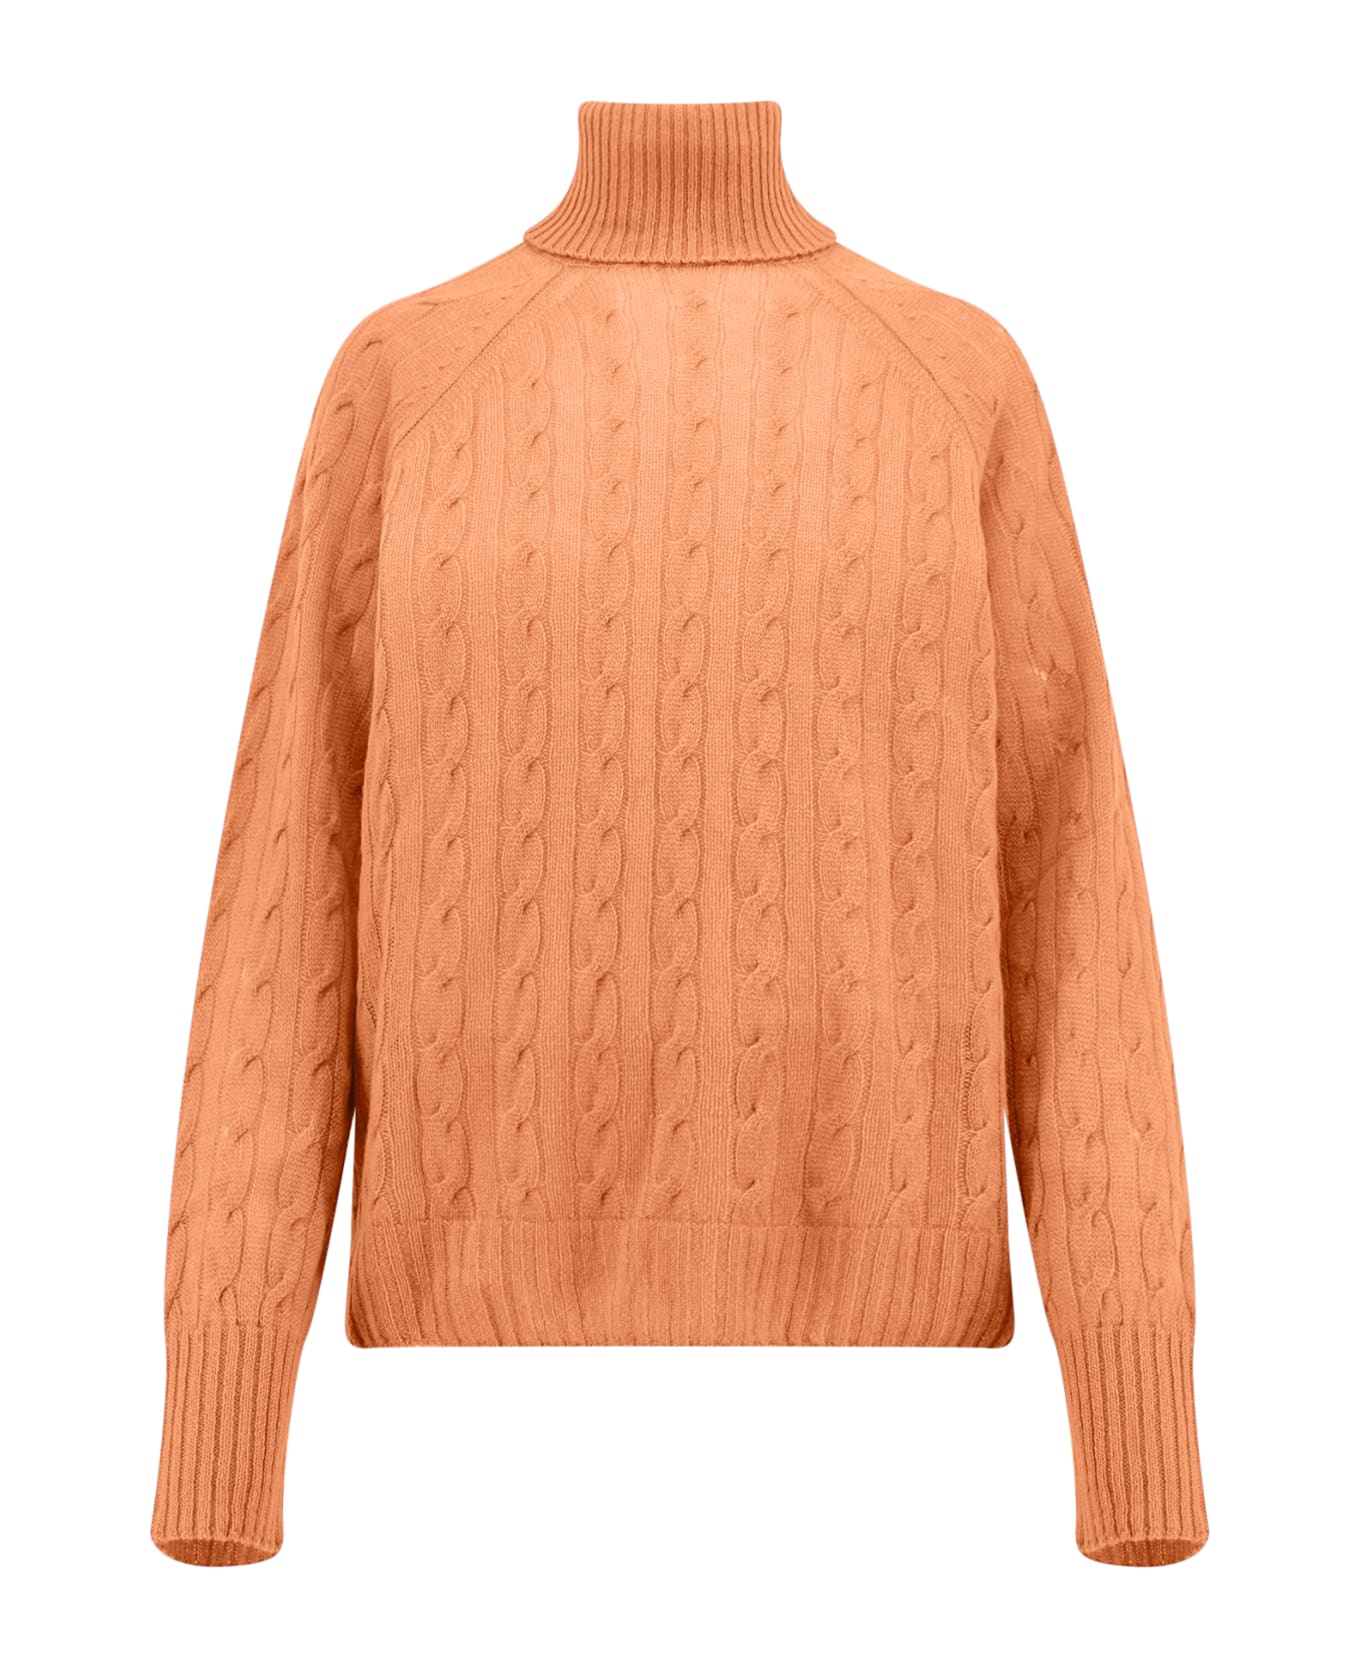 Etro Sweater - Orange